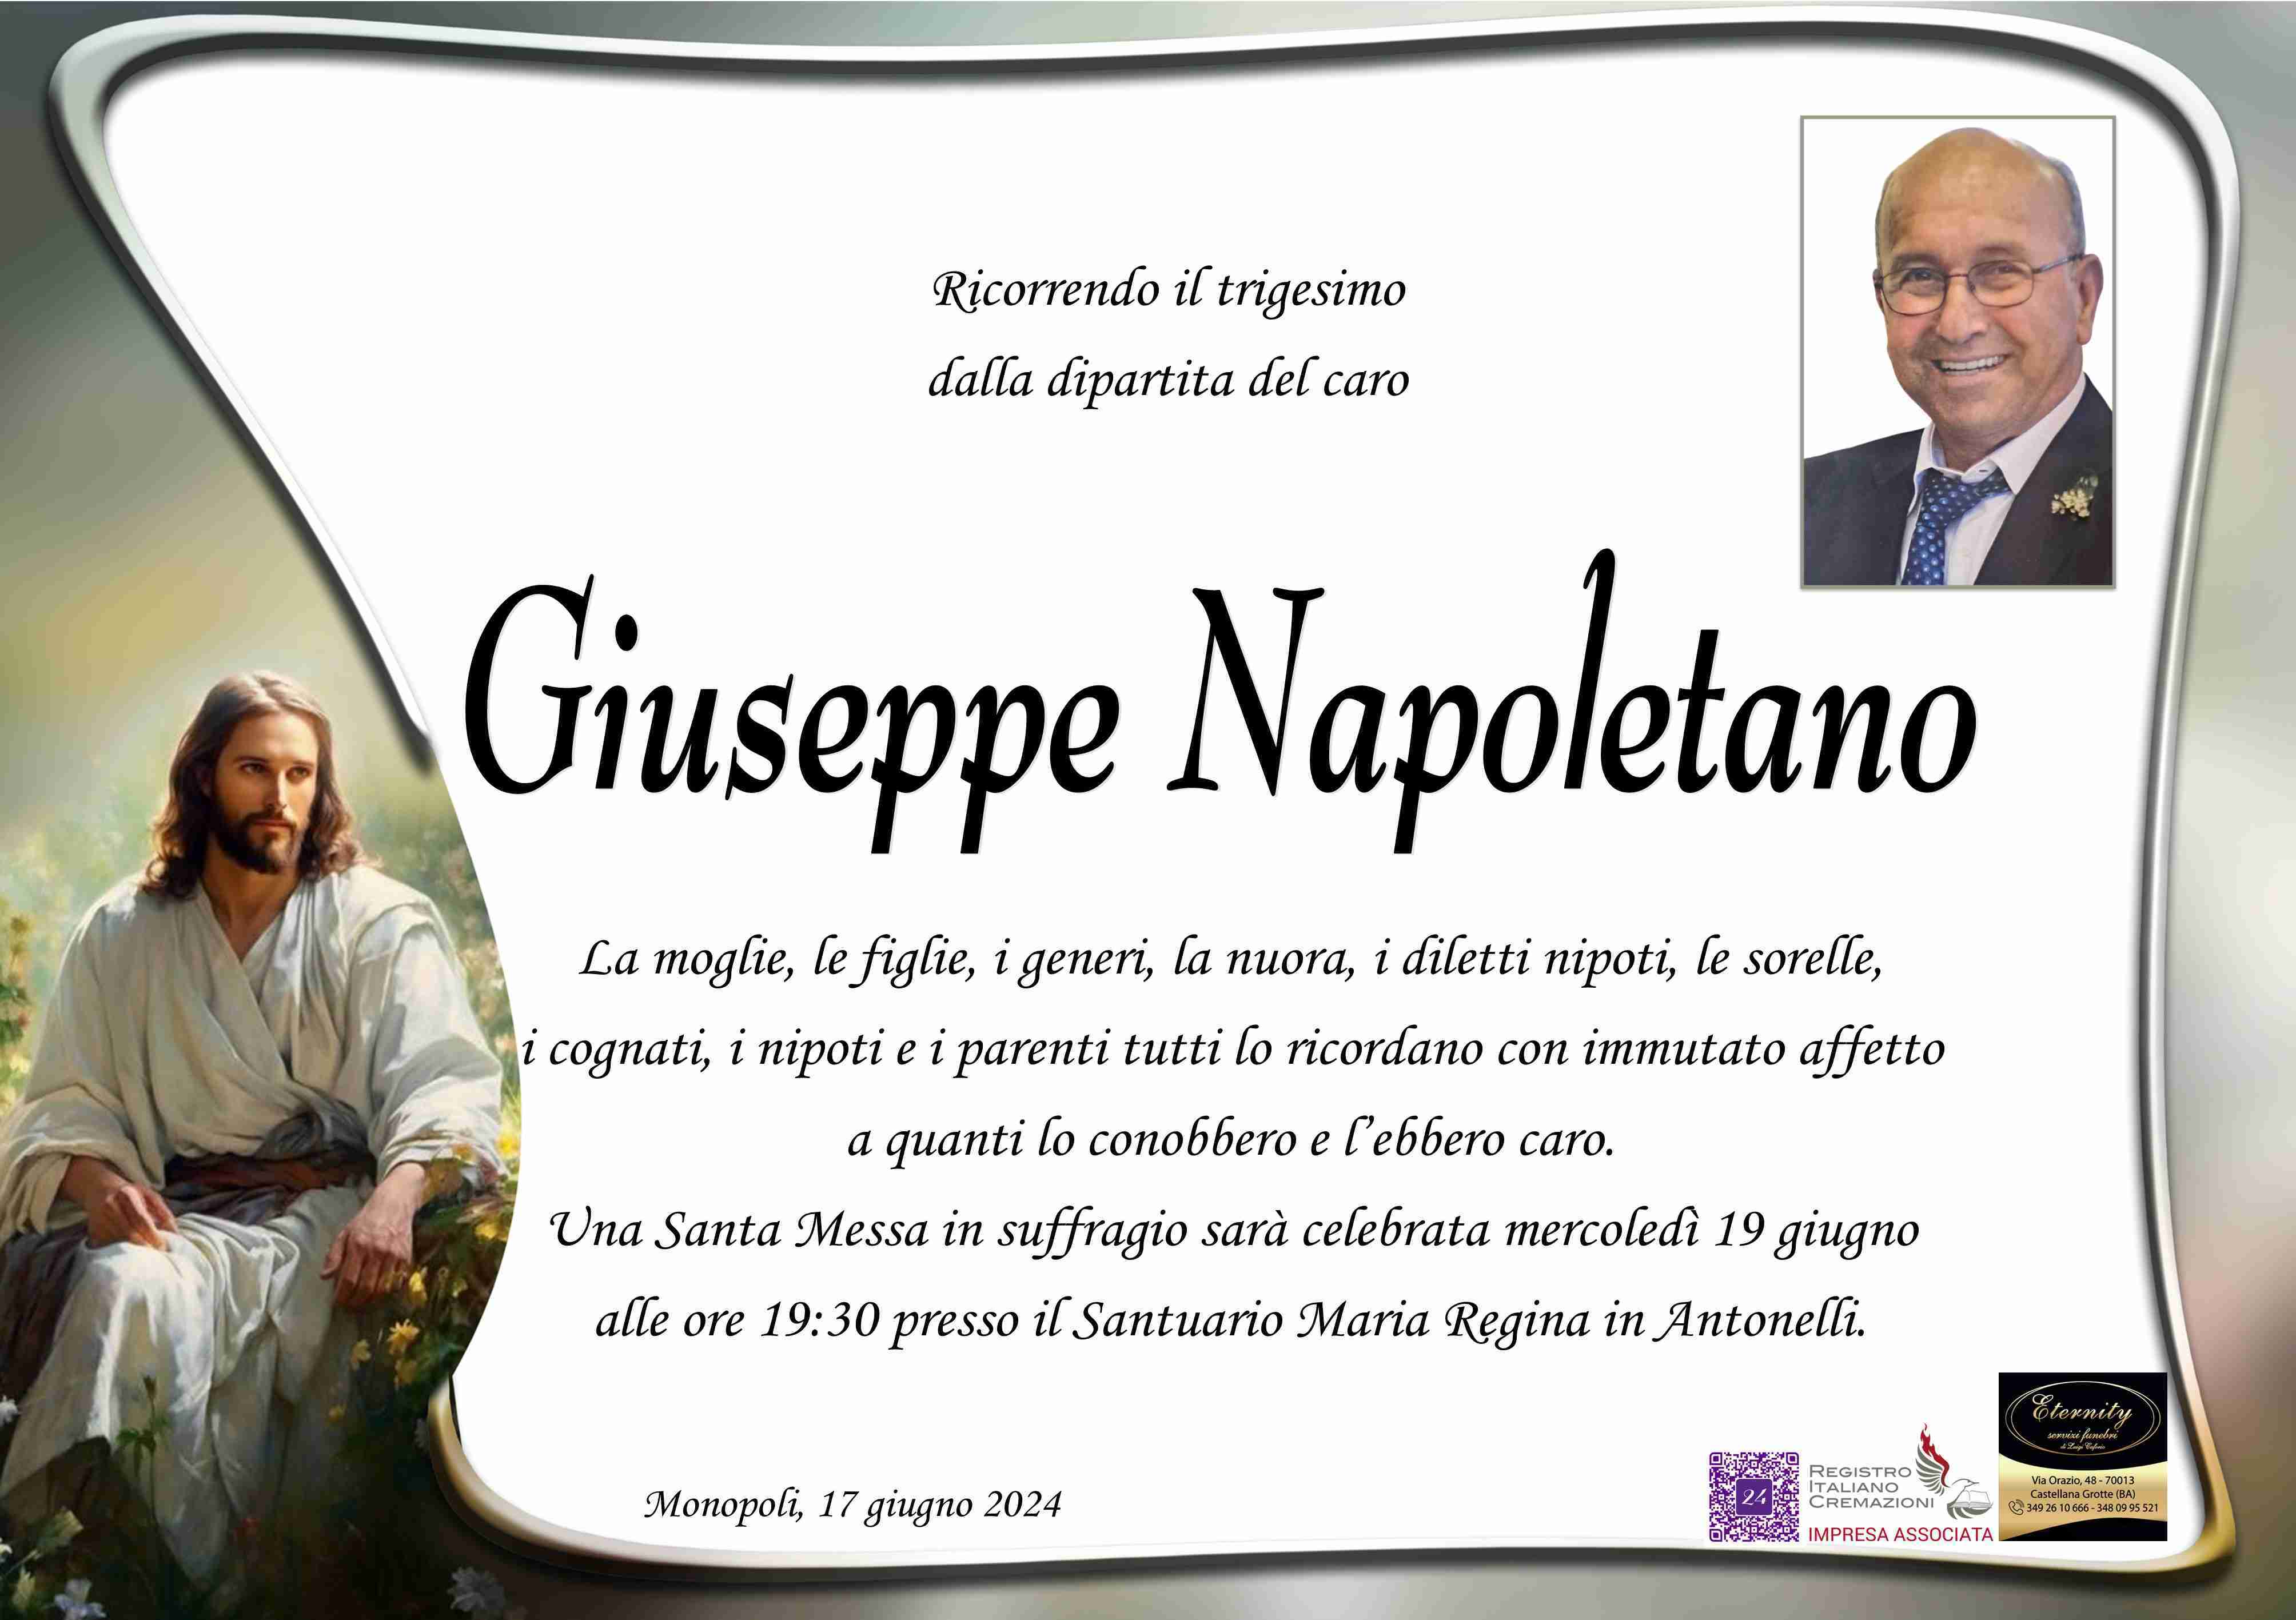 Giuseppe Napoletano